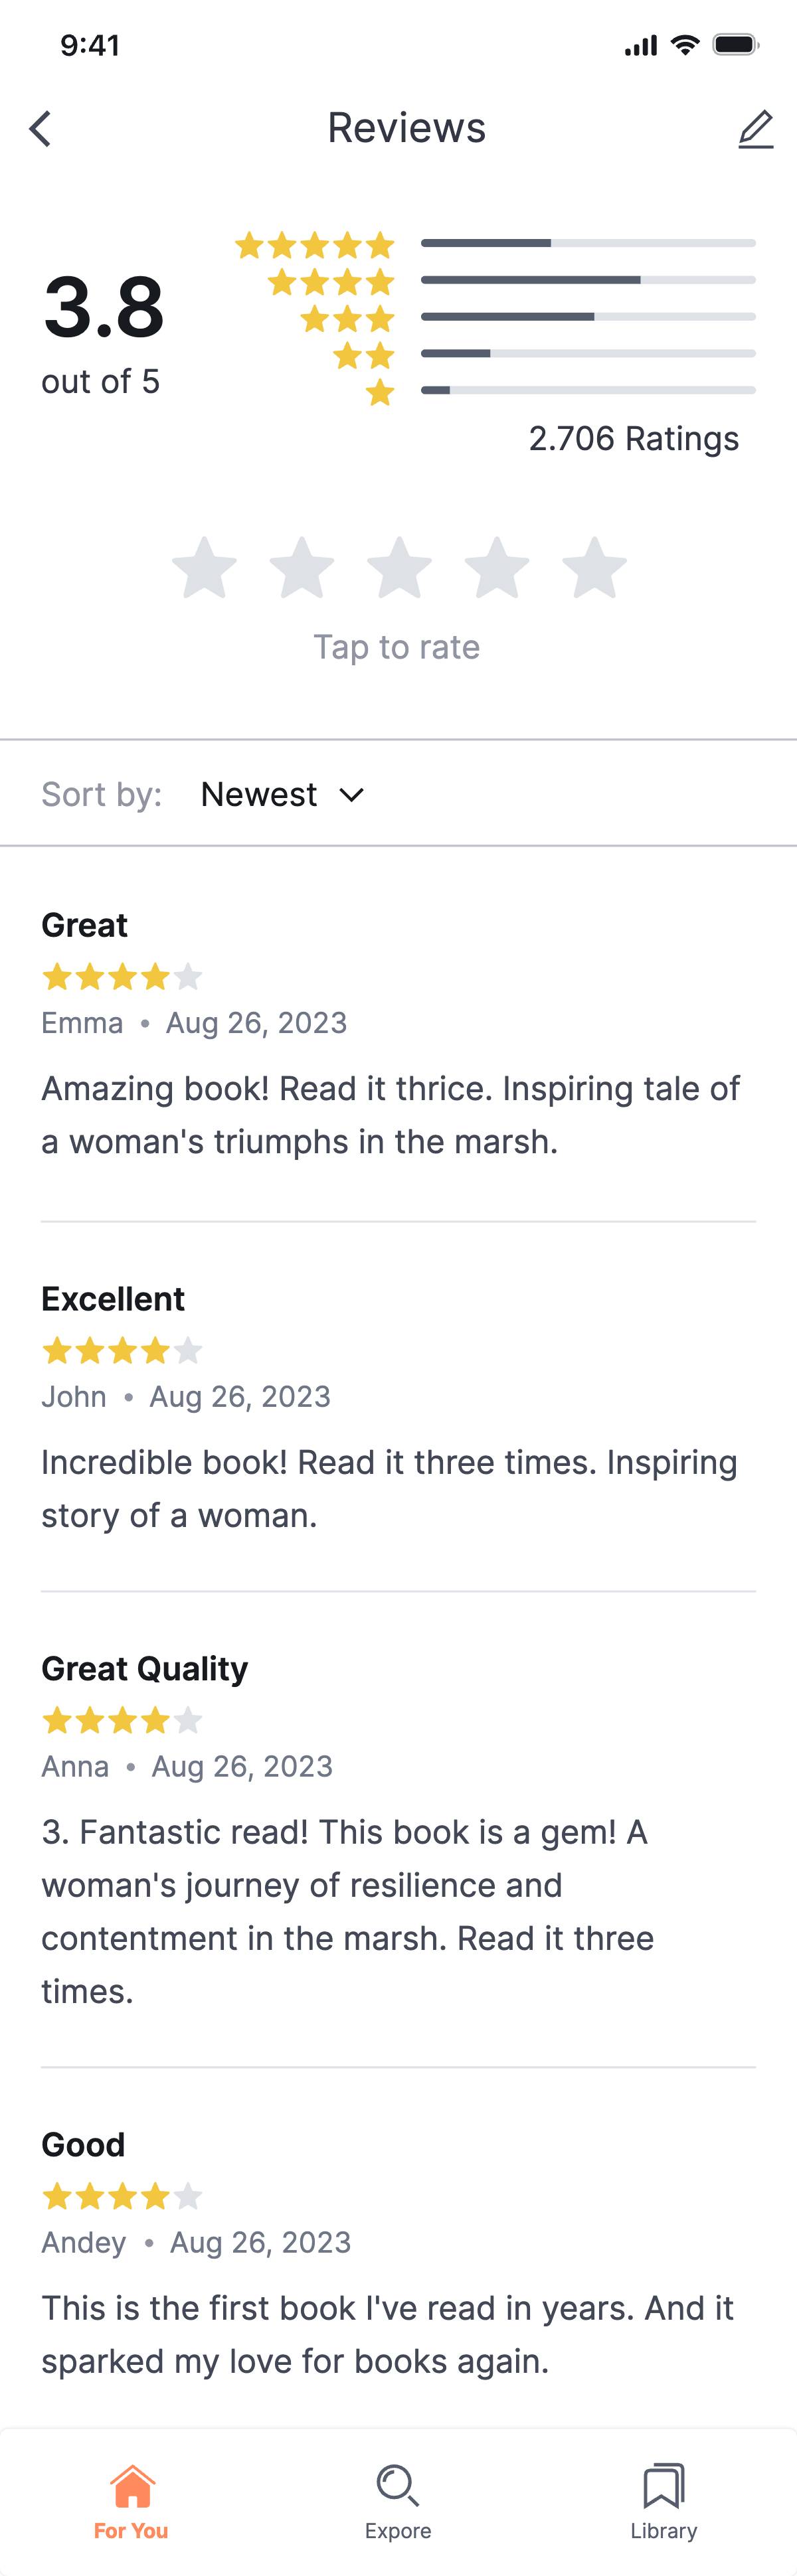 Book details - All reviews